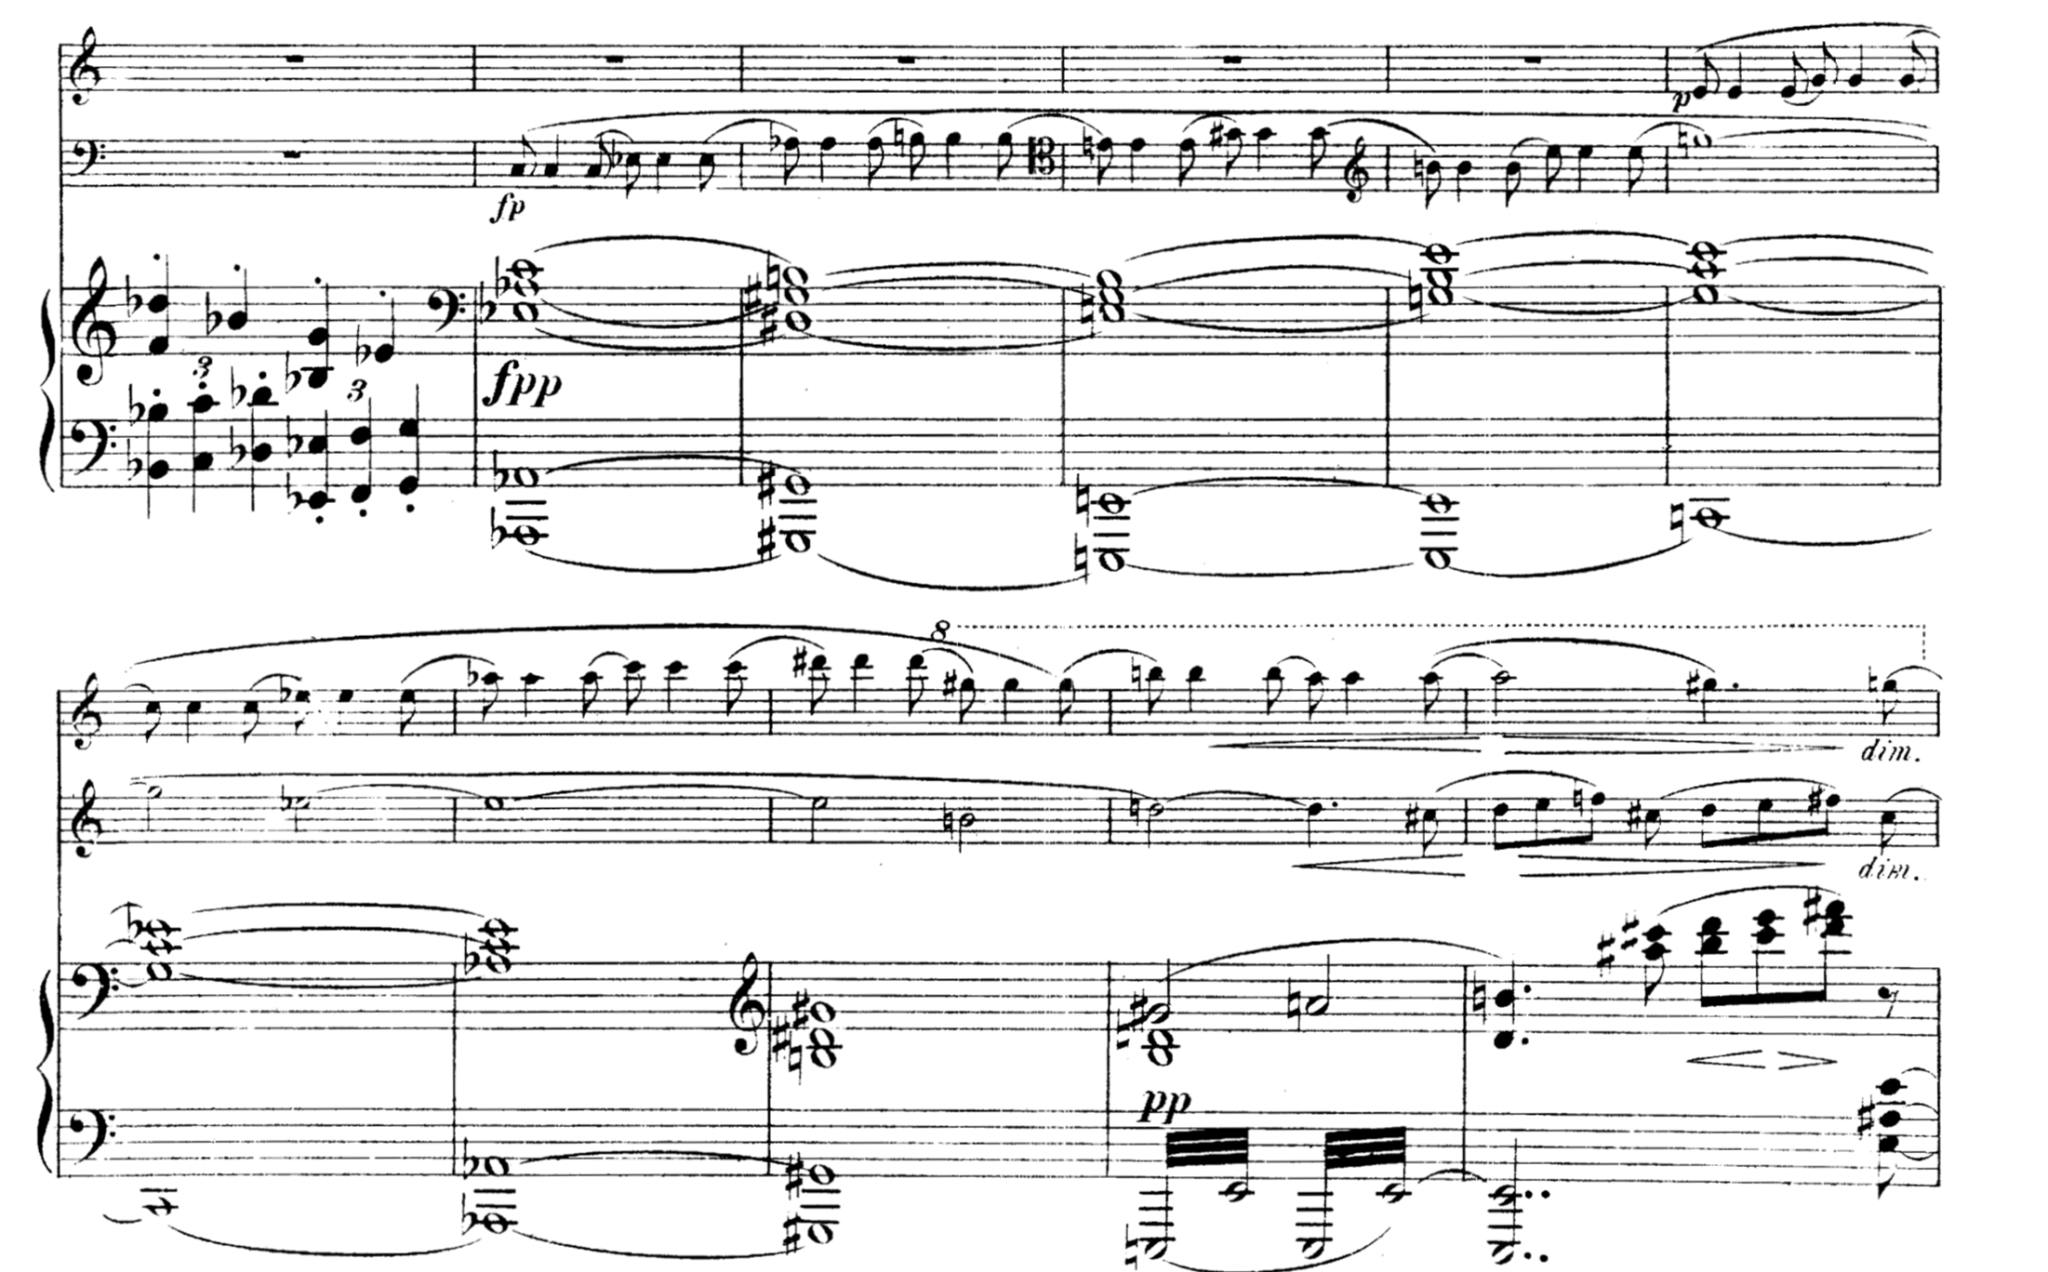 neo-riemannian-triadic-progressions-open-music-theory